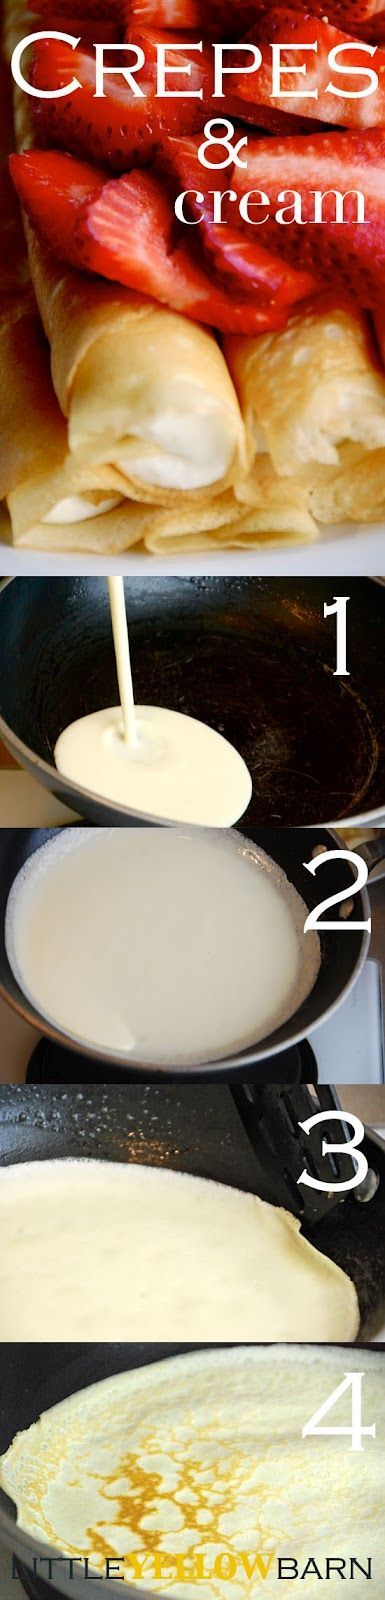 Crepes – 4 eggs, 1/2 c butter, melted, 1/3 c sugar, 1 c flour, 1 c milk, 1/4 c water, 1 tsp. vanilla, dash